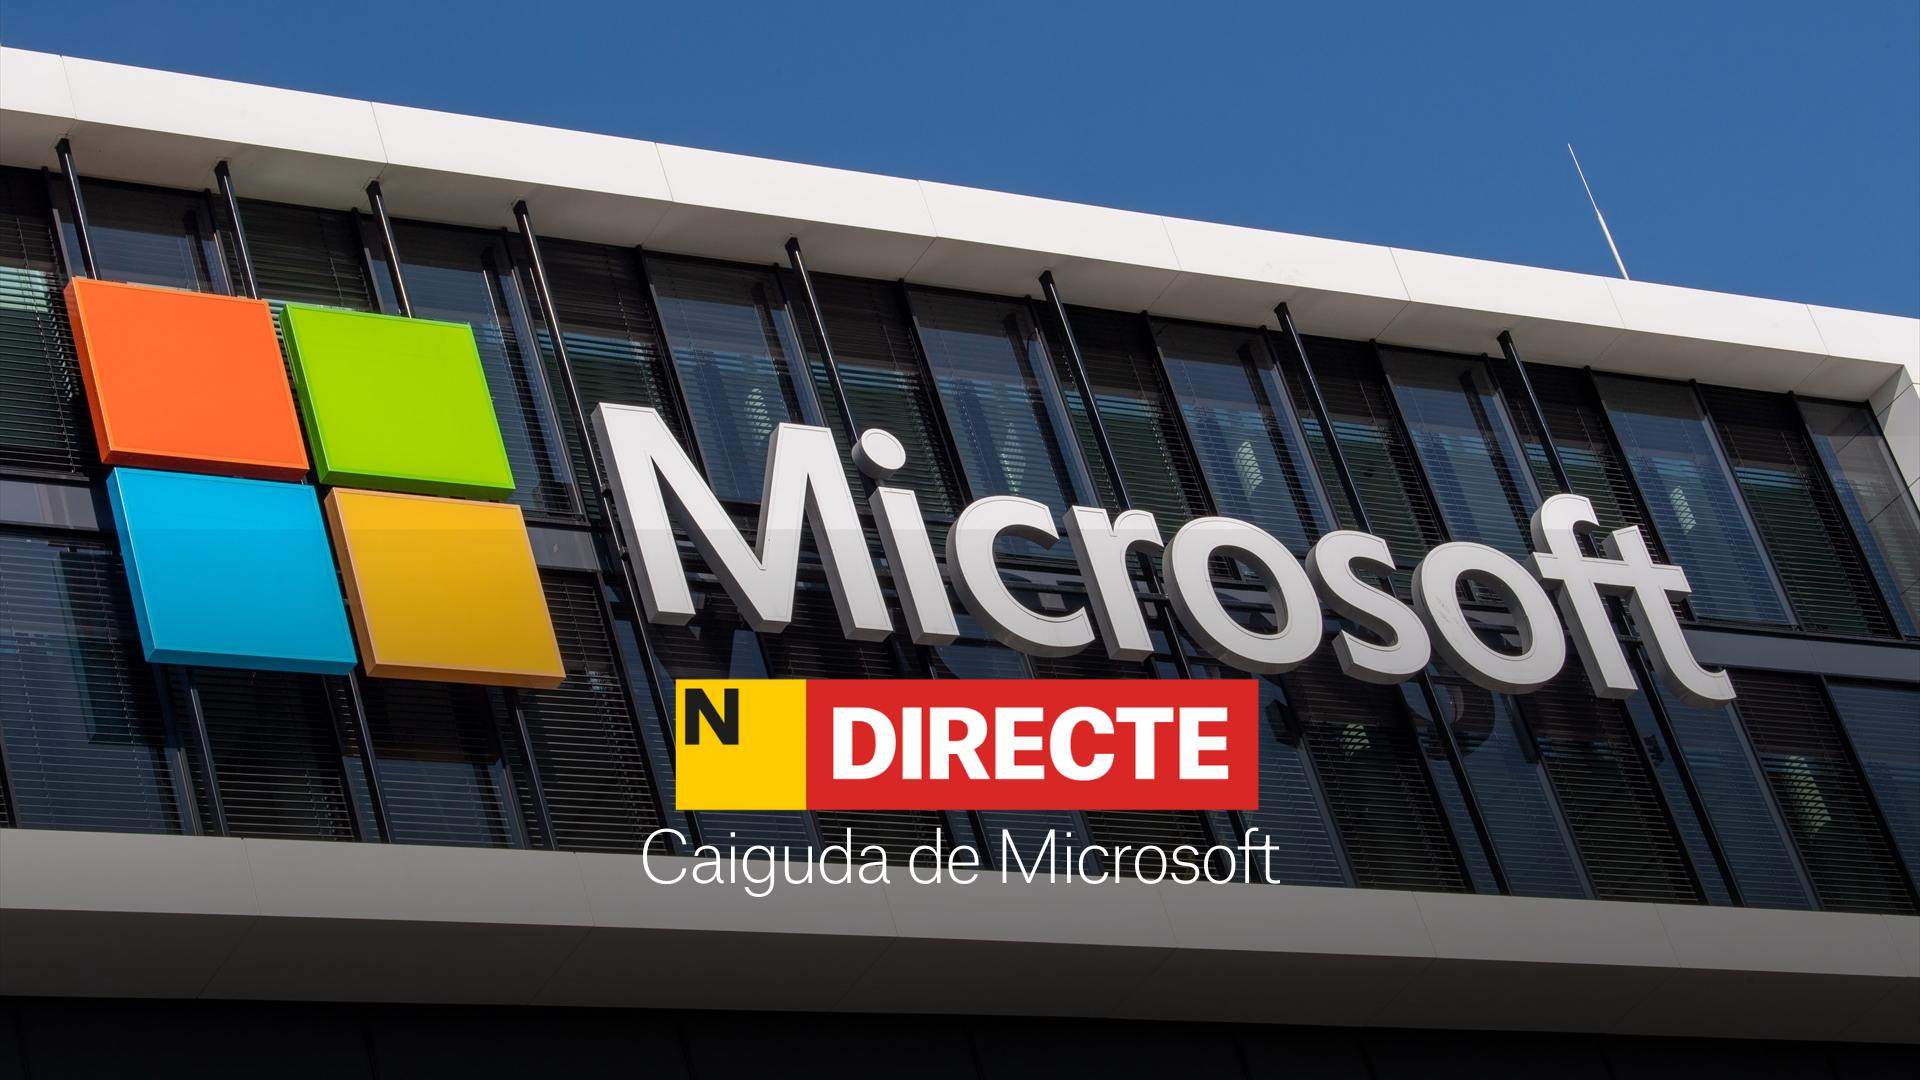 Caiguda de Microsoft avui, DIRECTE | Última hora de Windows, CrowdStrike i afectacions als aeroports